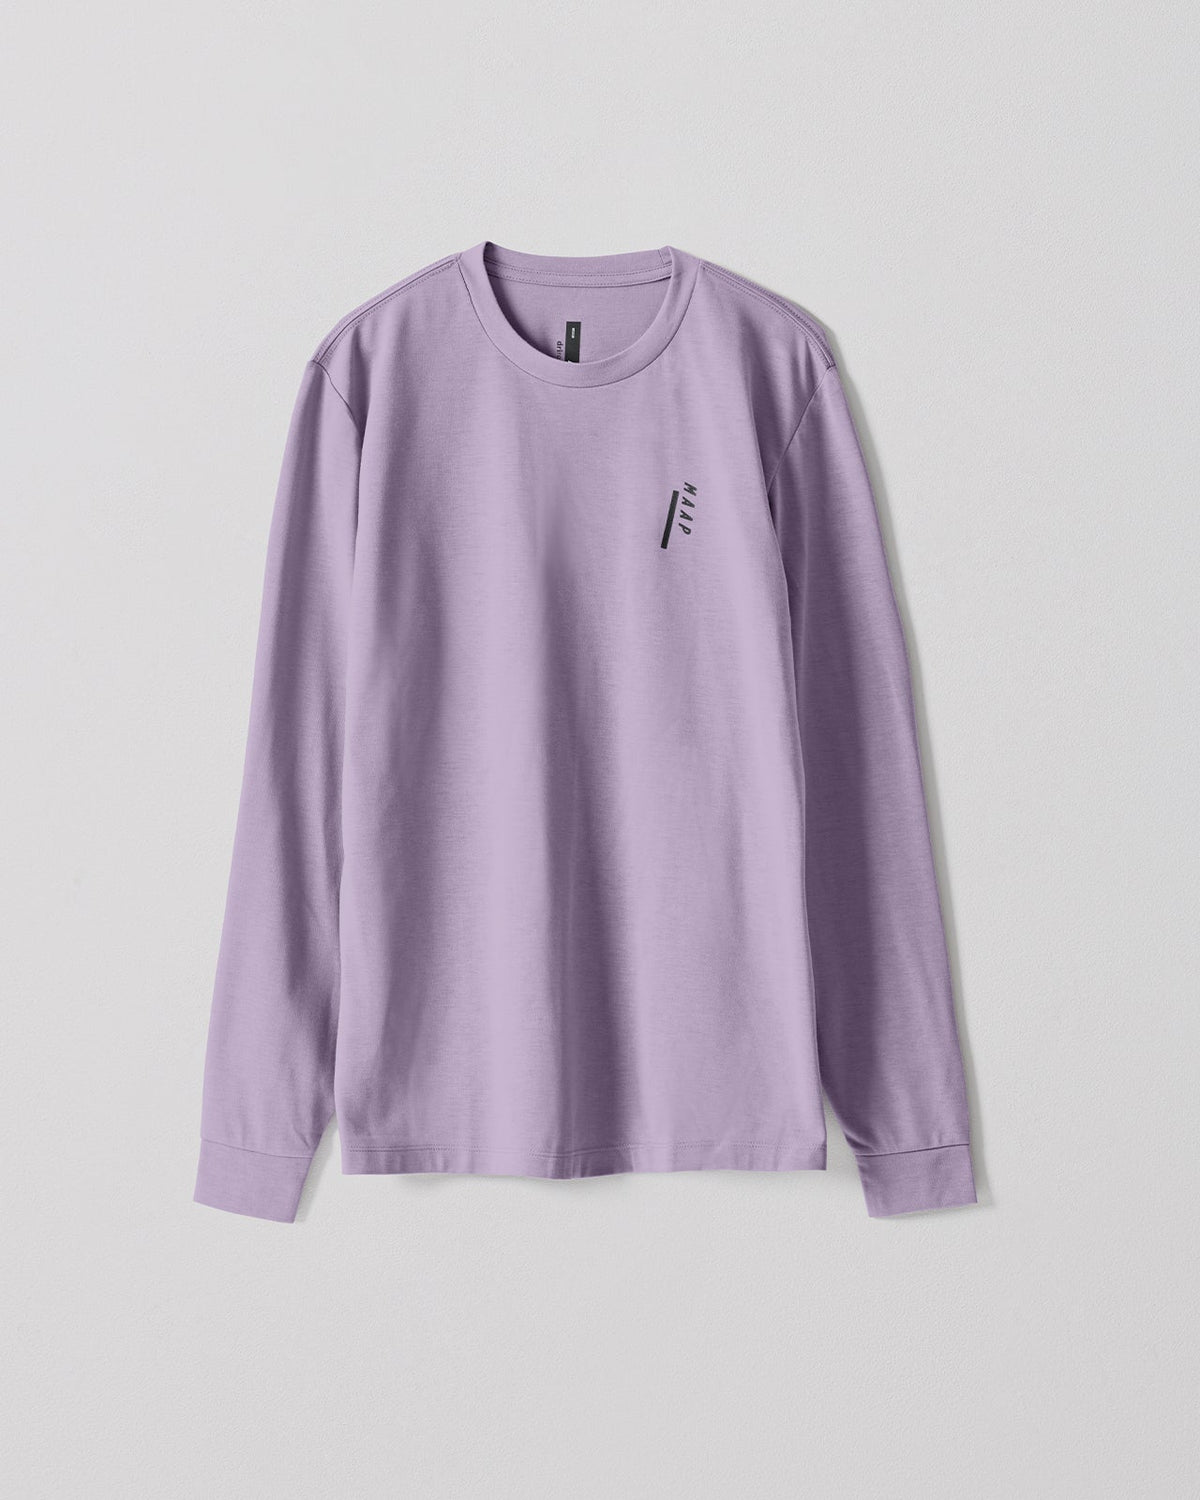 MAAP Sparks Purple Fog サイクル Tシャツ | CYCLISM